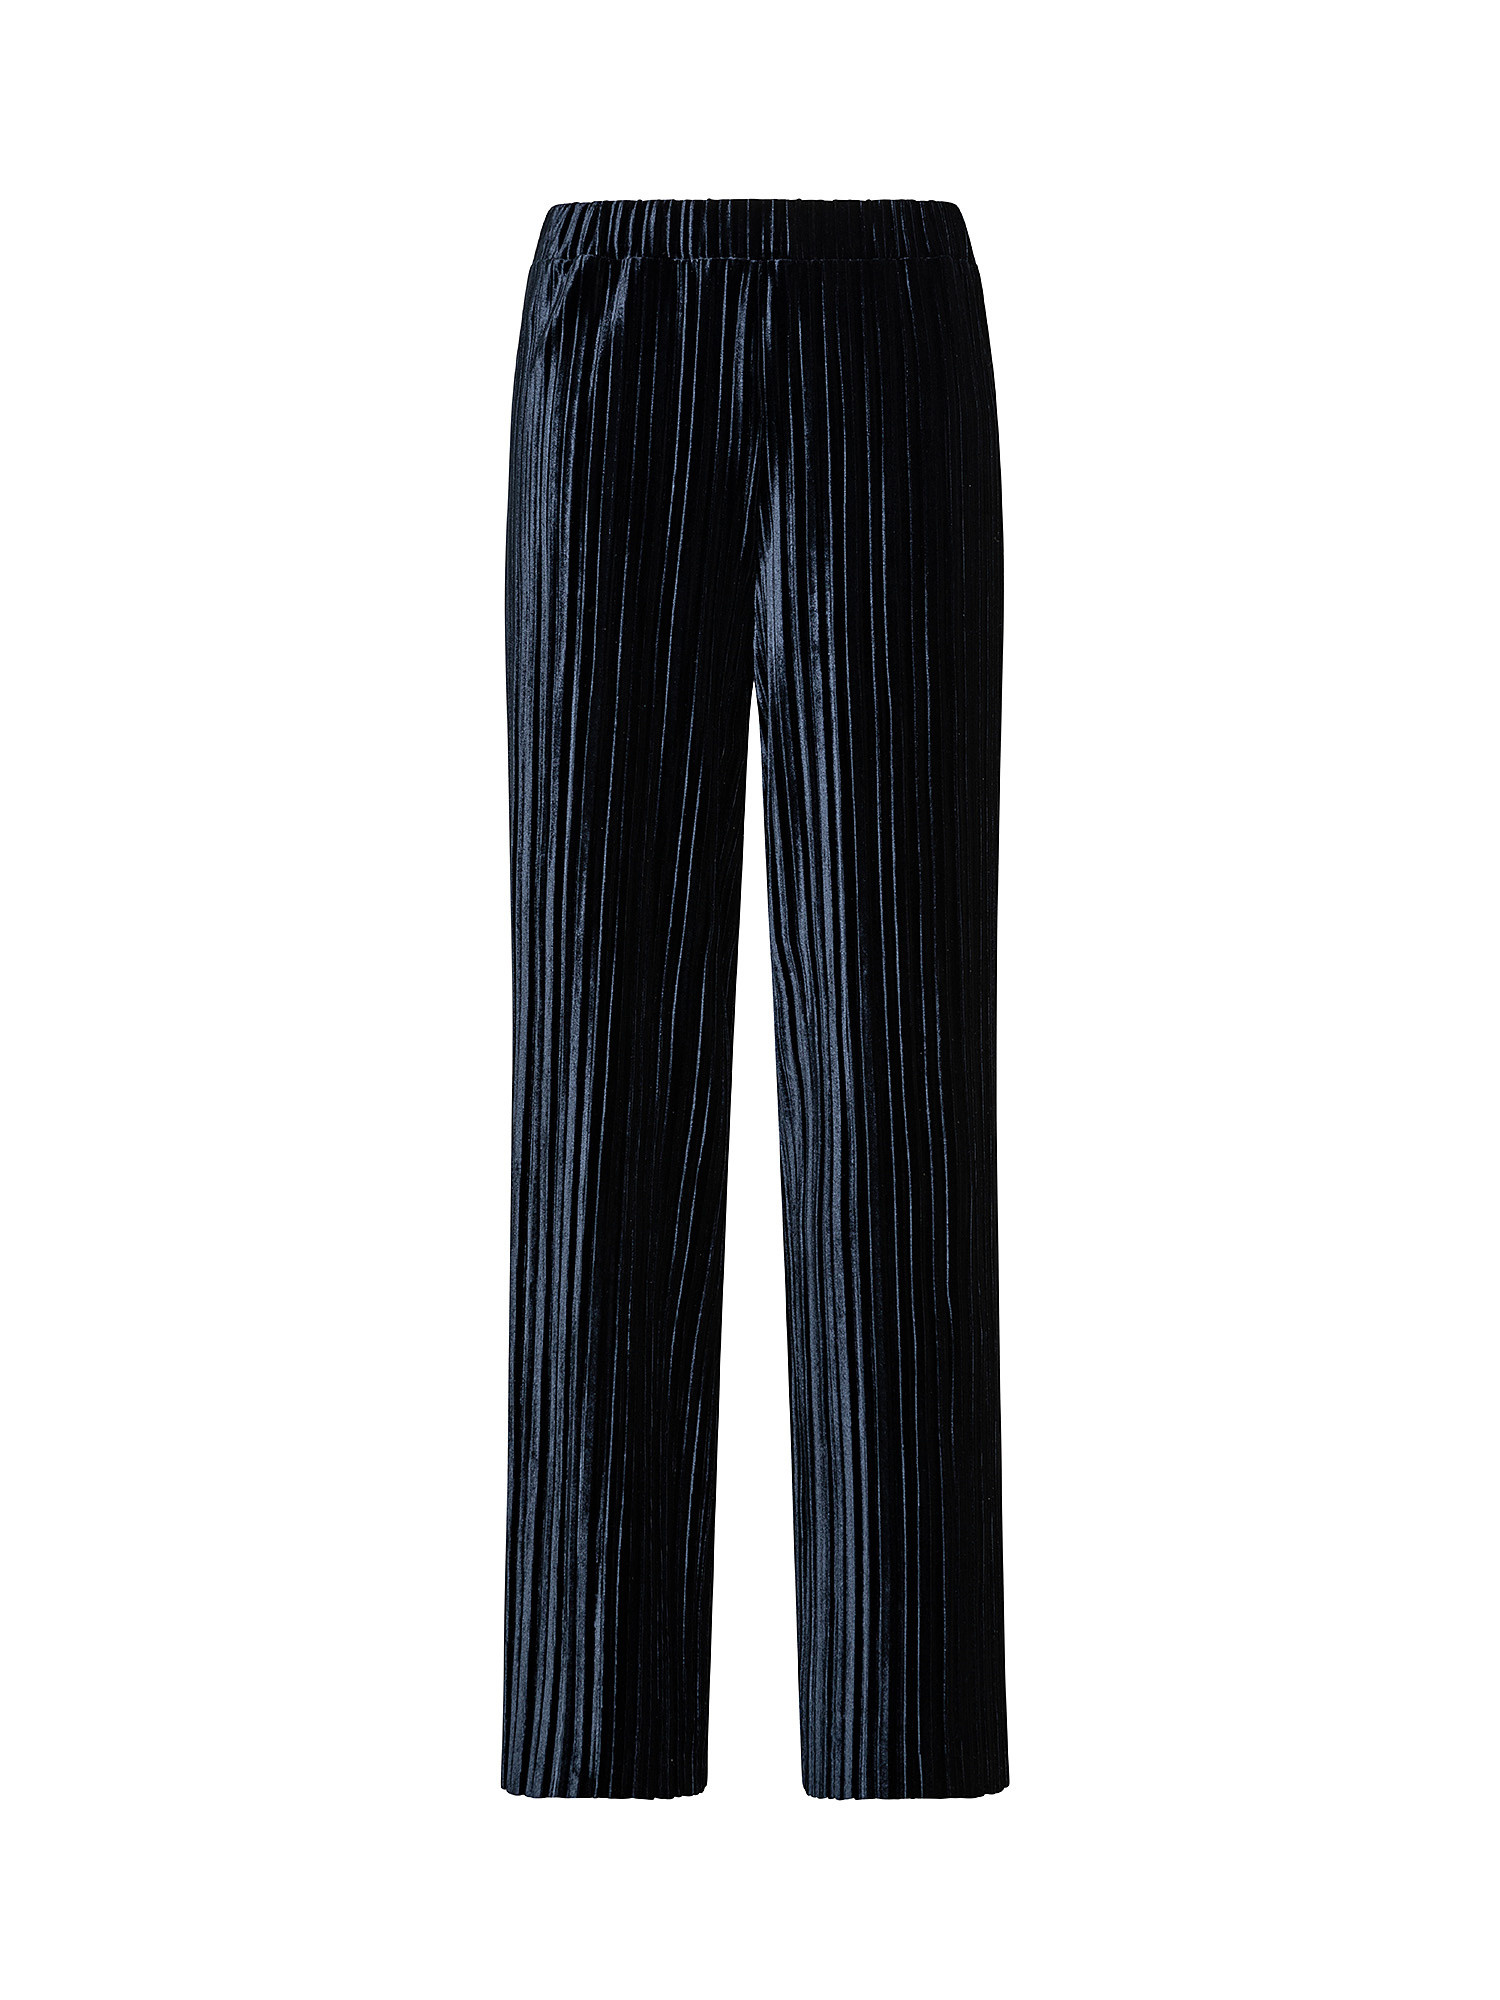 Pantalone in velour plissà©, Blu, large image number 0